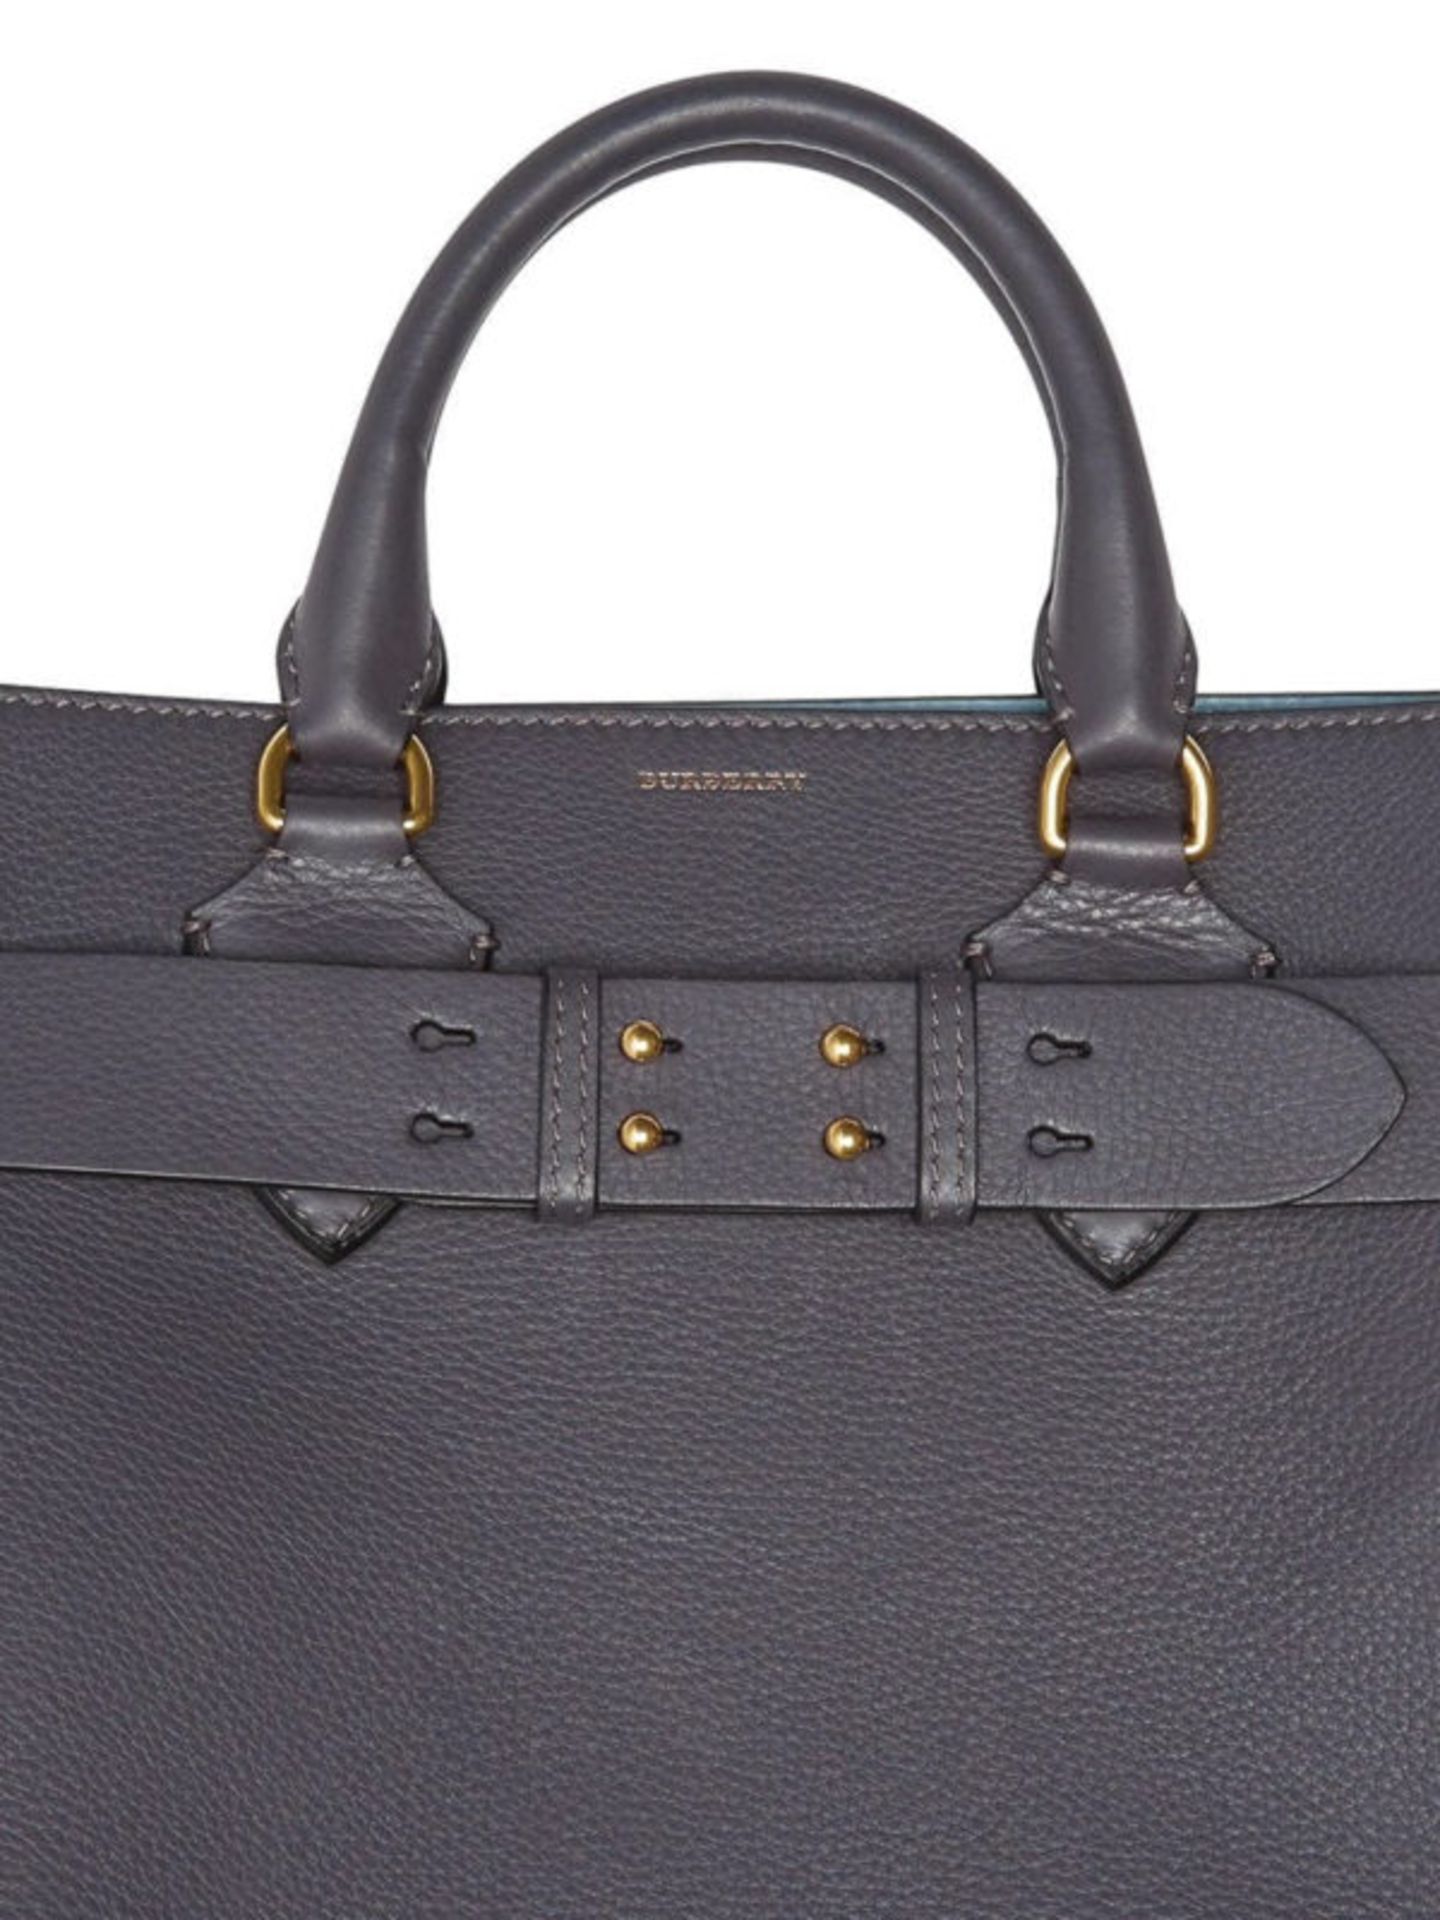 Genuine Burberry The Medium leather Belt Bag. Charcoal grey and baby blue. - Bild 3 aus 13